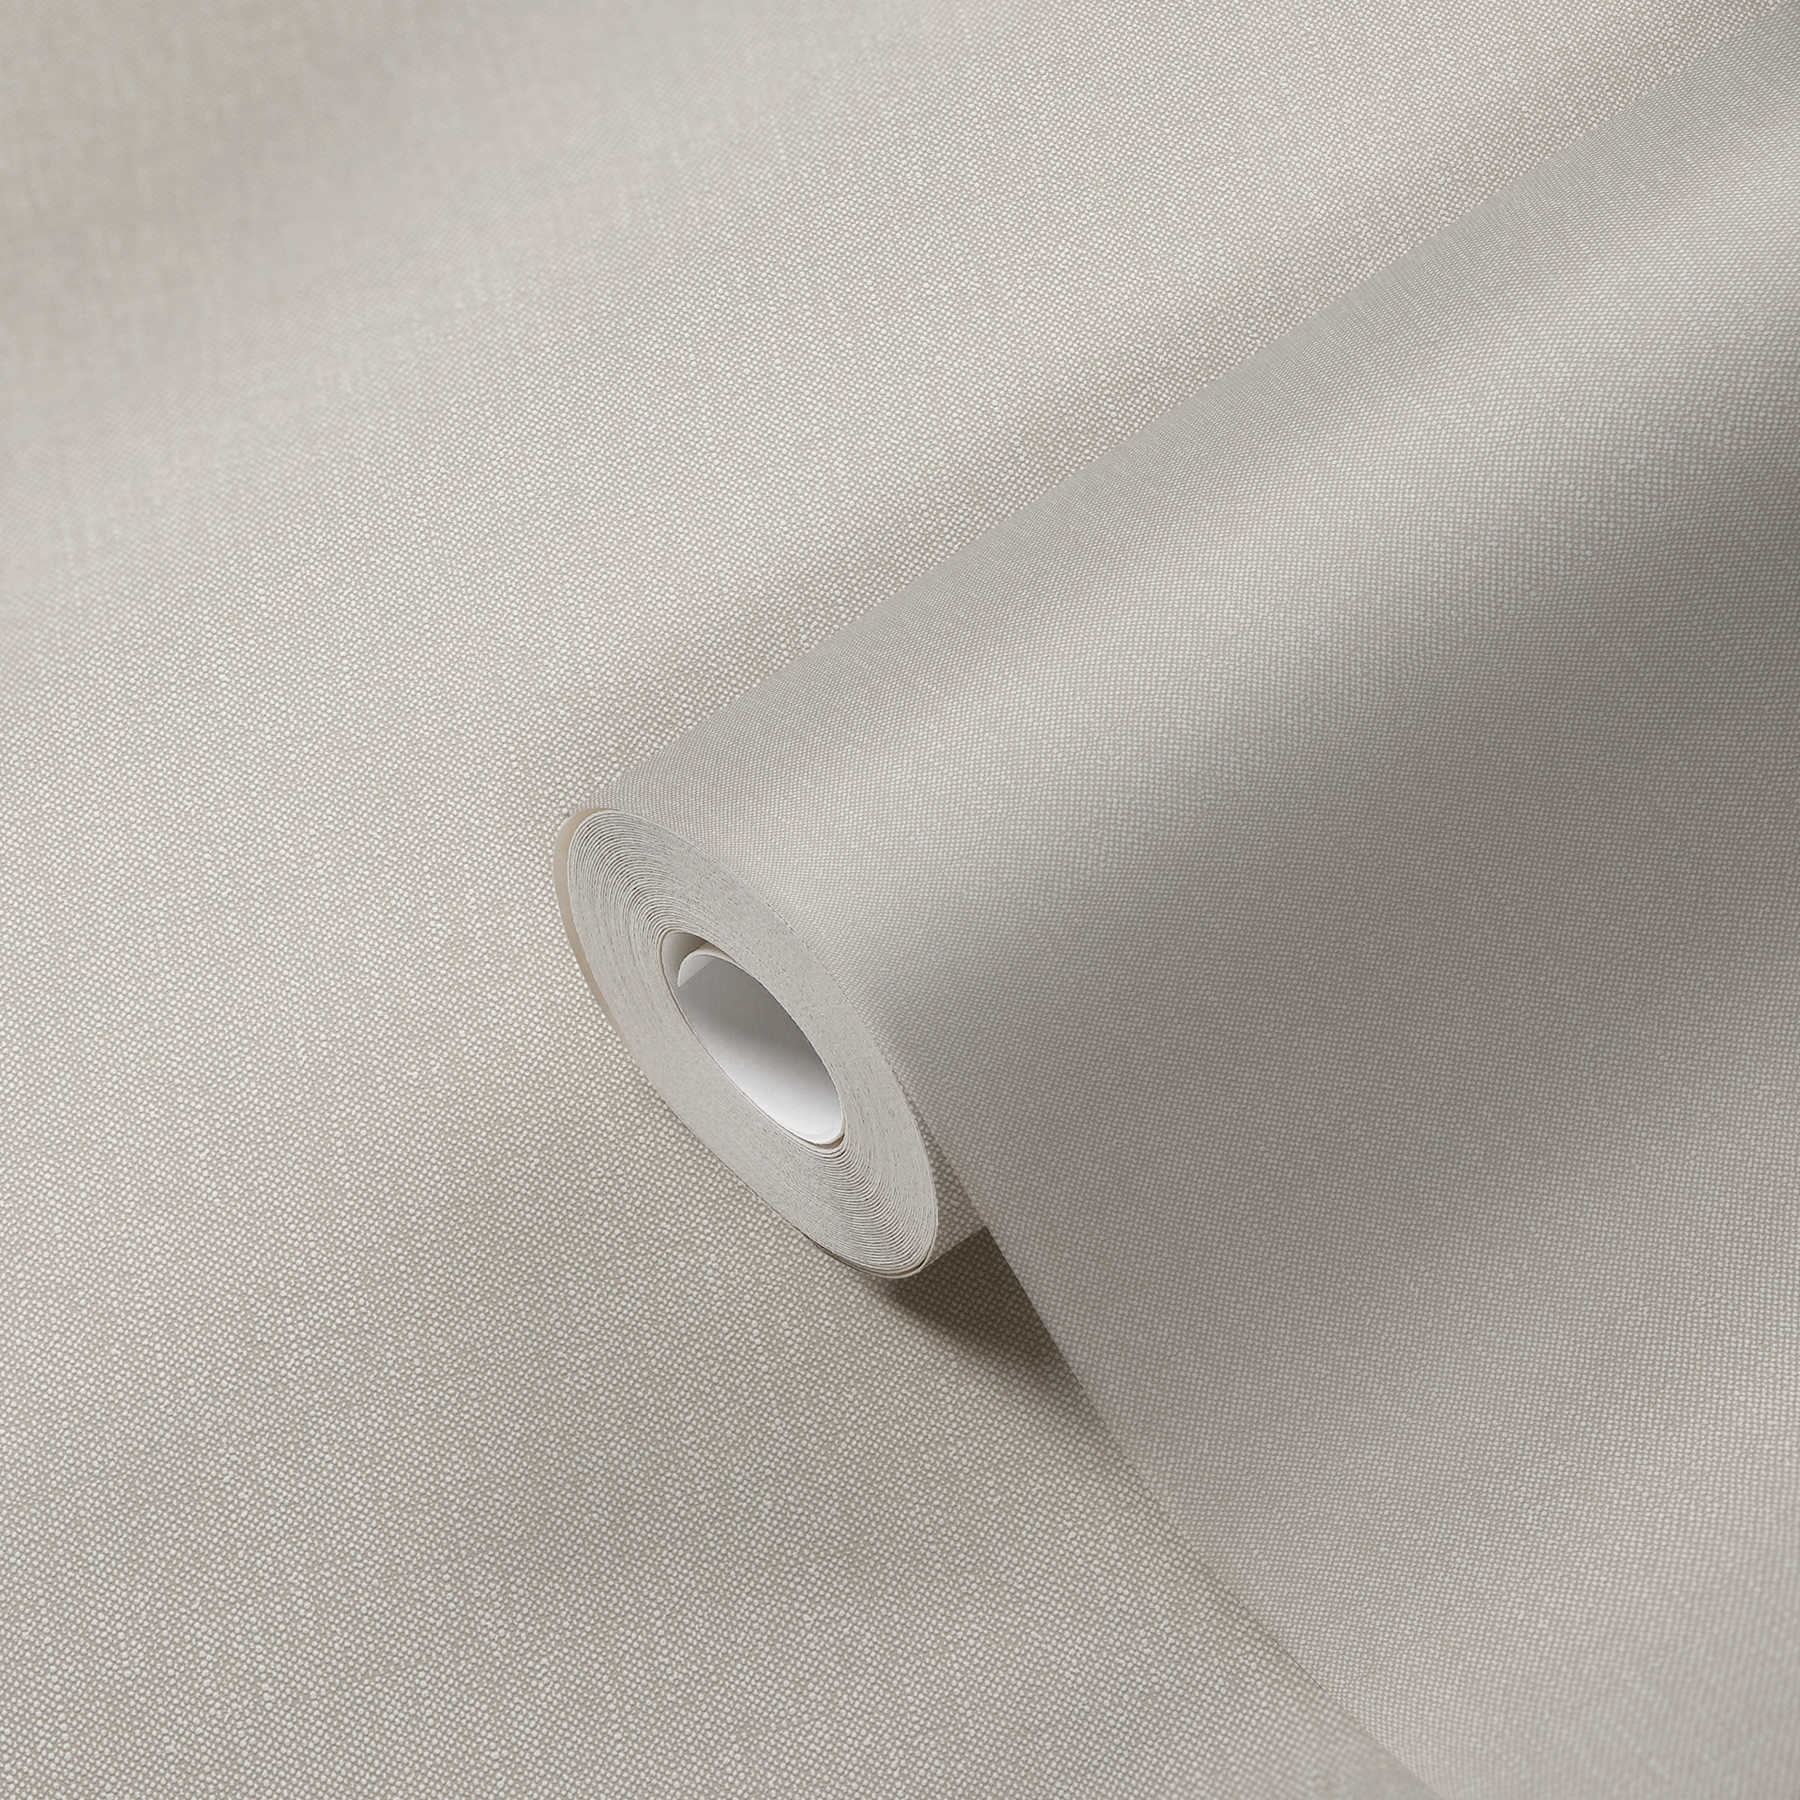             Plain wallpaper with textured pattern in linen look - beige
        